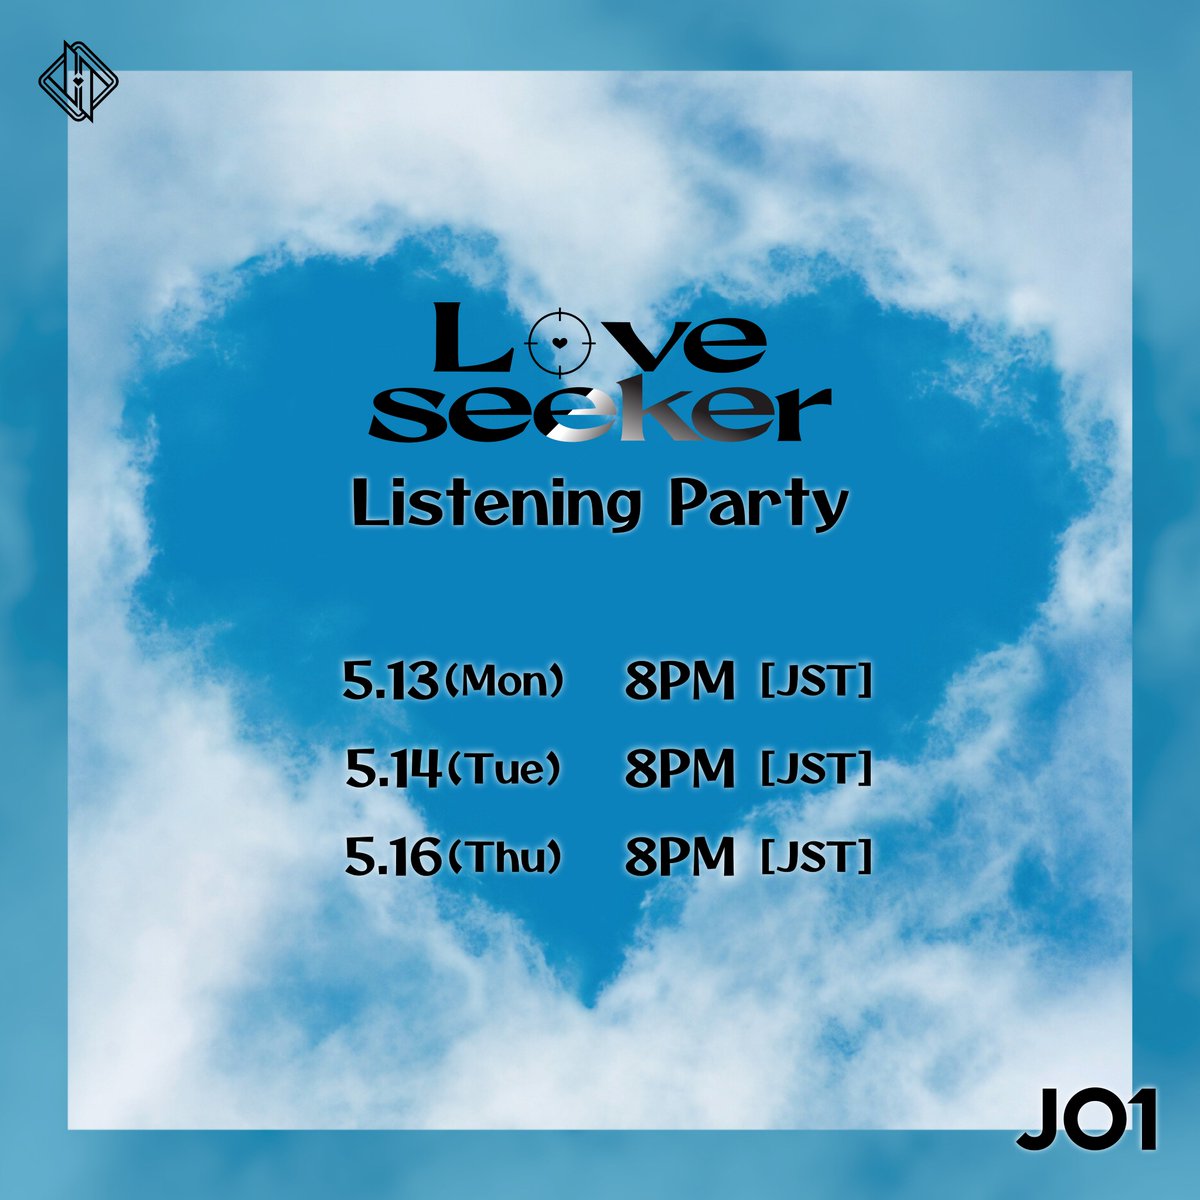 [📢]  #Love_seeker Release
#JO1 Listening Party🎧

❣️05.13(MON) 8PM
❣️05.14(TUE) 8PM
❣️05.16(THU) 8PM

Follow our stationhead
🔗share.stationhead.com/BLK3jbxG4xH

#JO1_HITCHHIKER
#HITCHHIKER